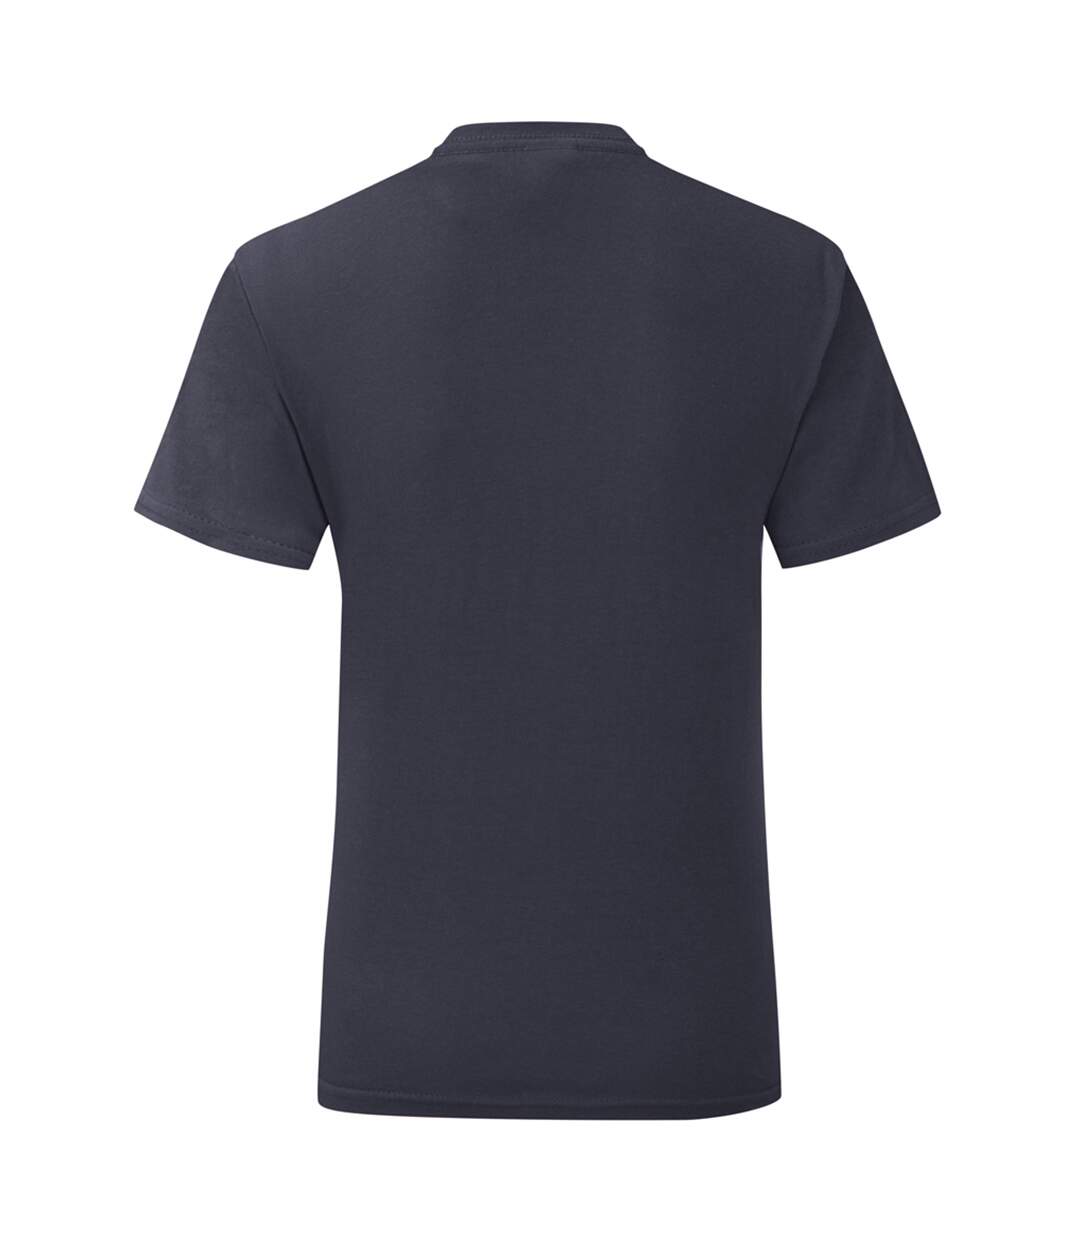 Fruit of the Loom - T-shirt ICONIC - Homme (Bleu marine foncé) - UTBC4909